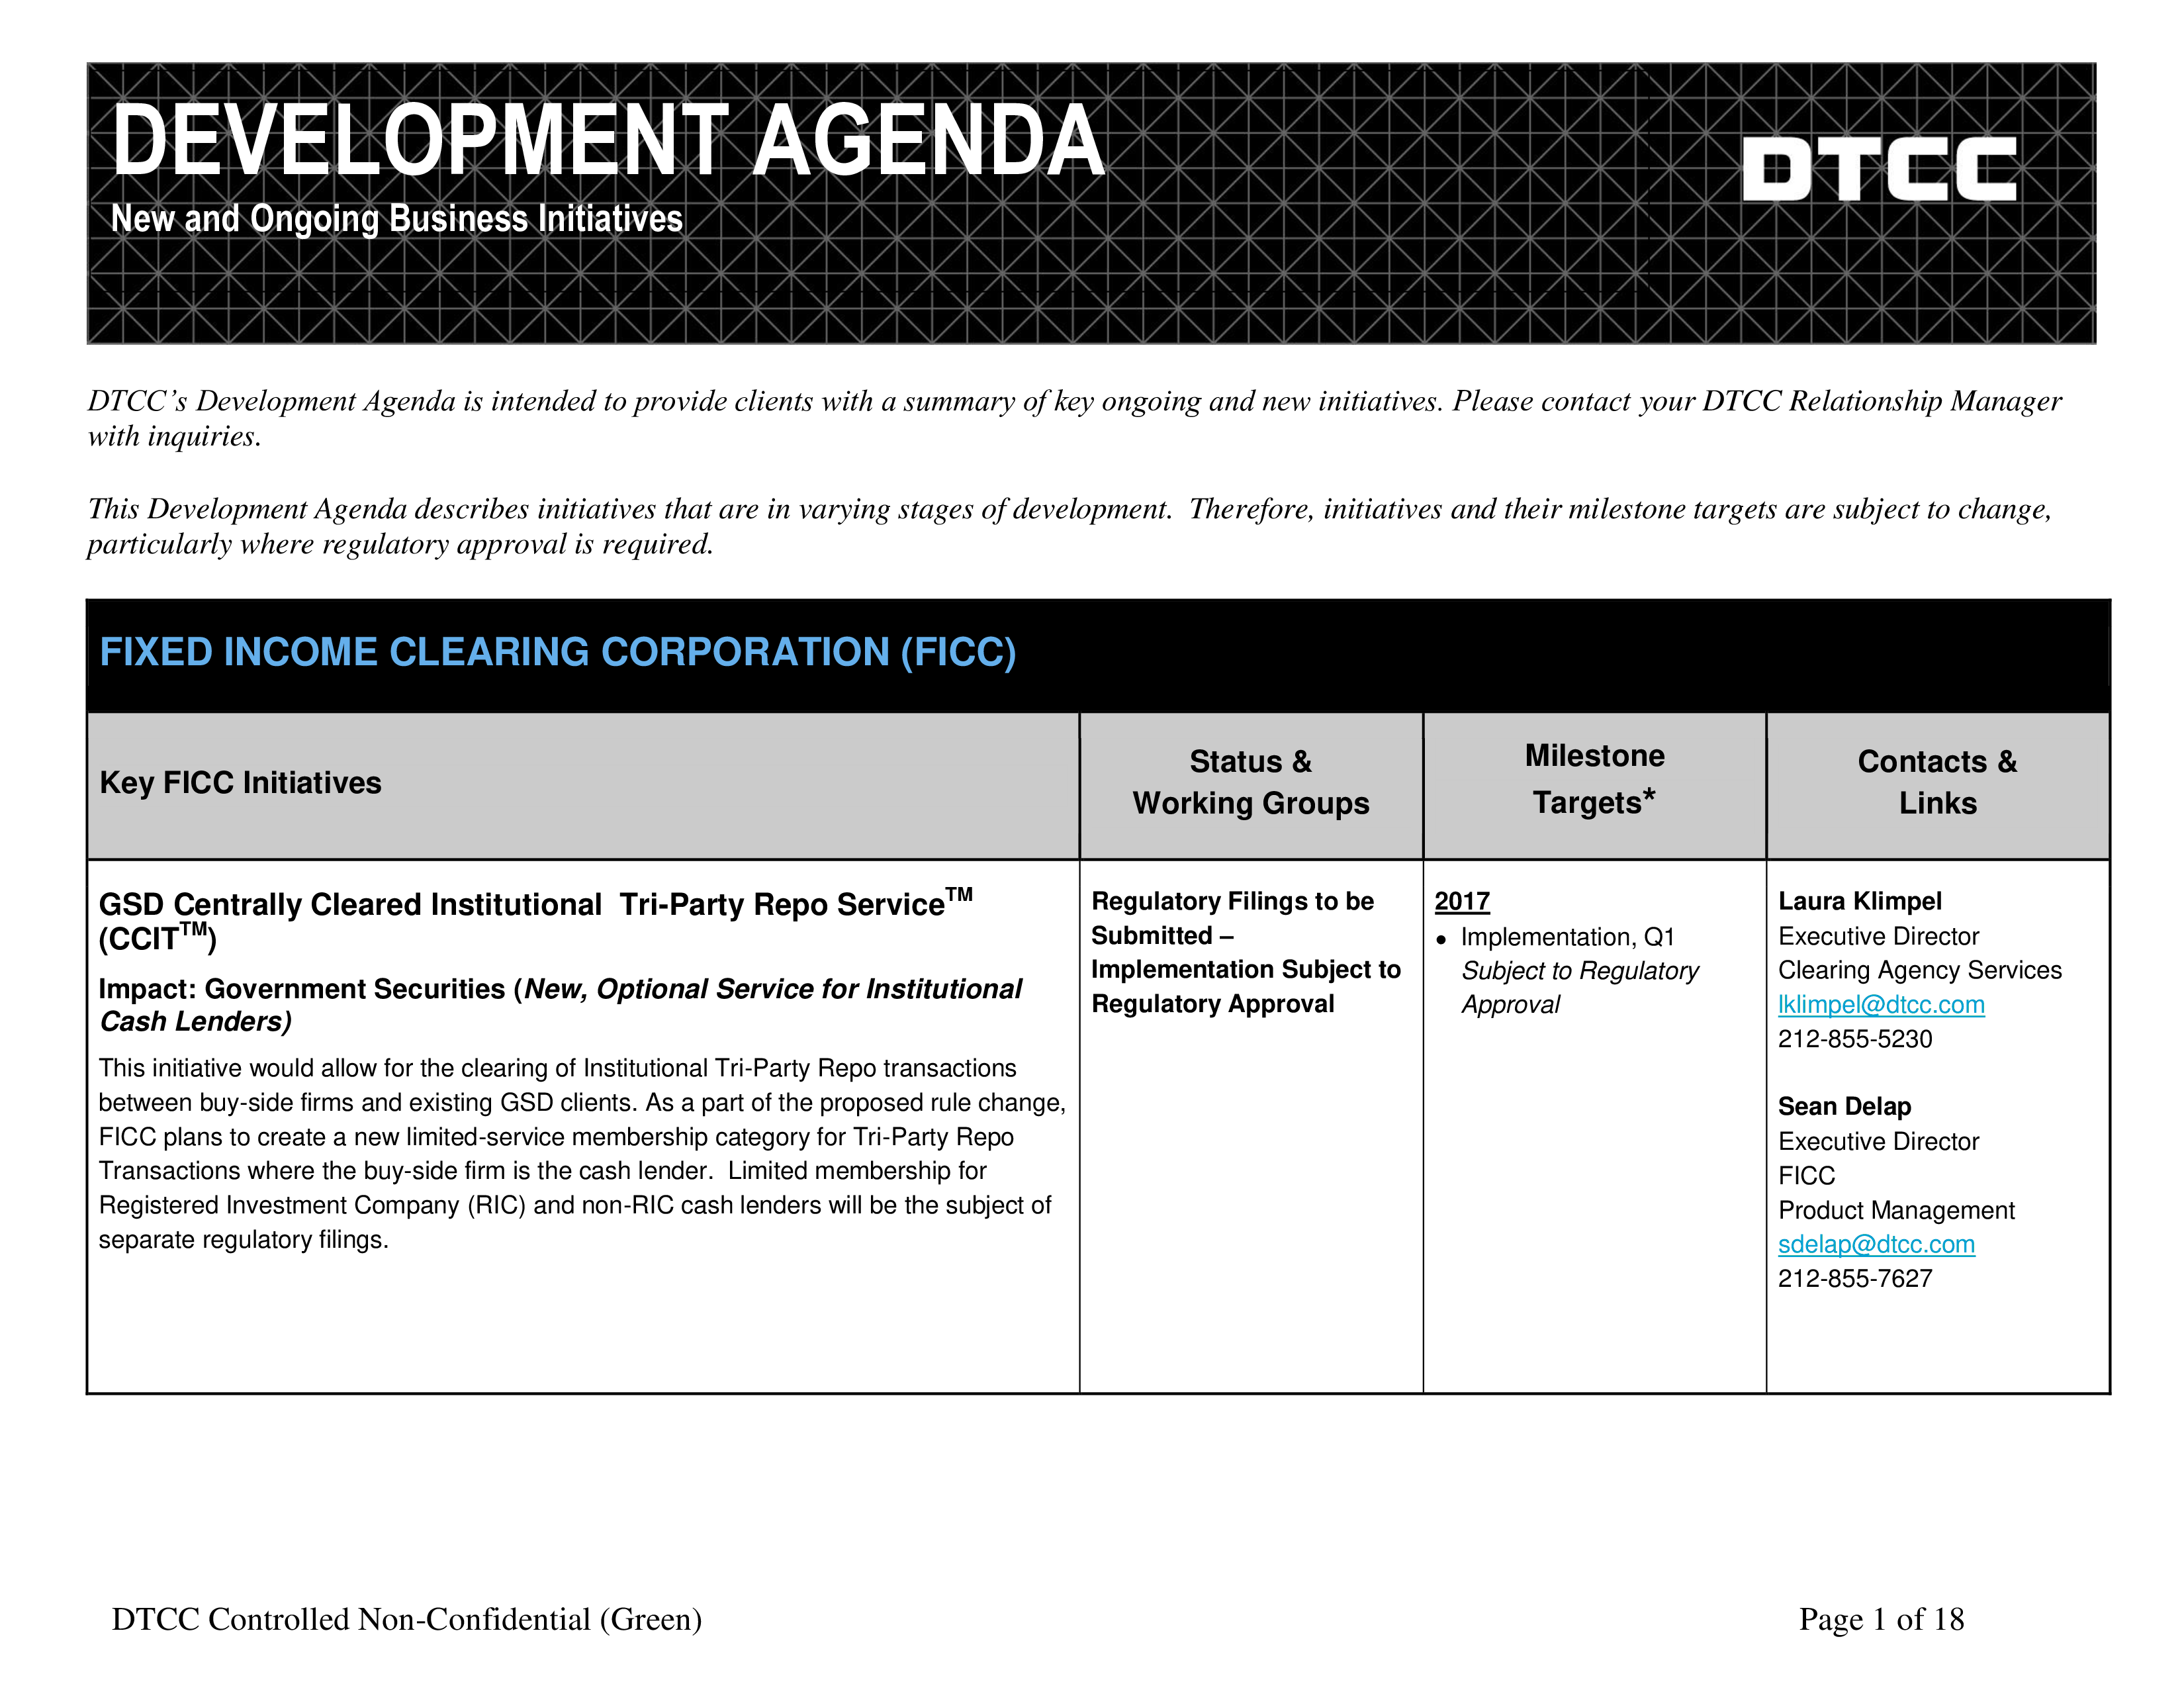 Development Agenda Guide main image